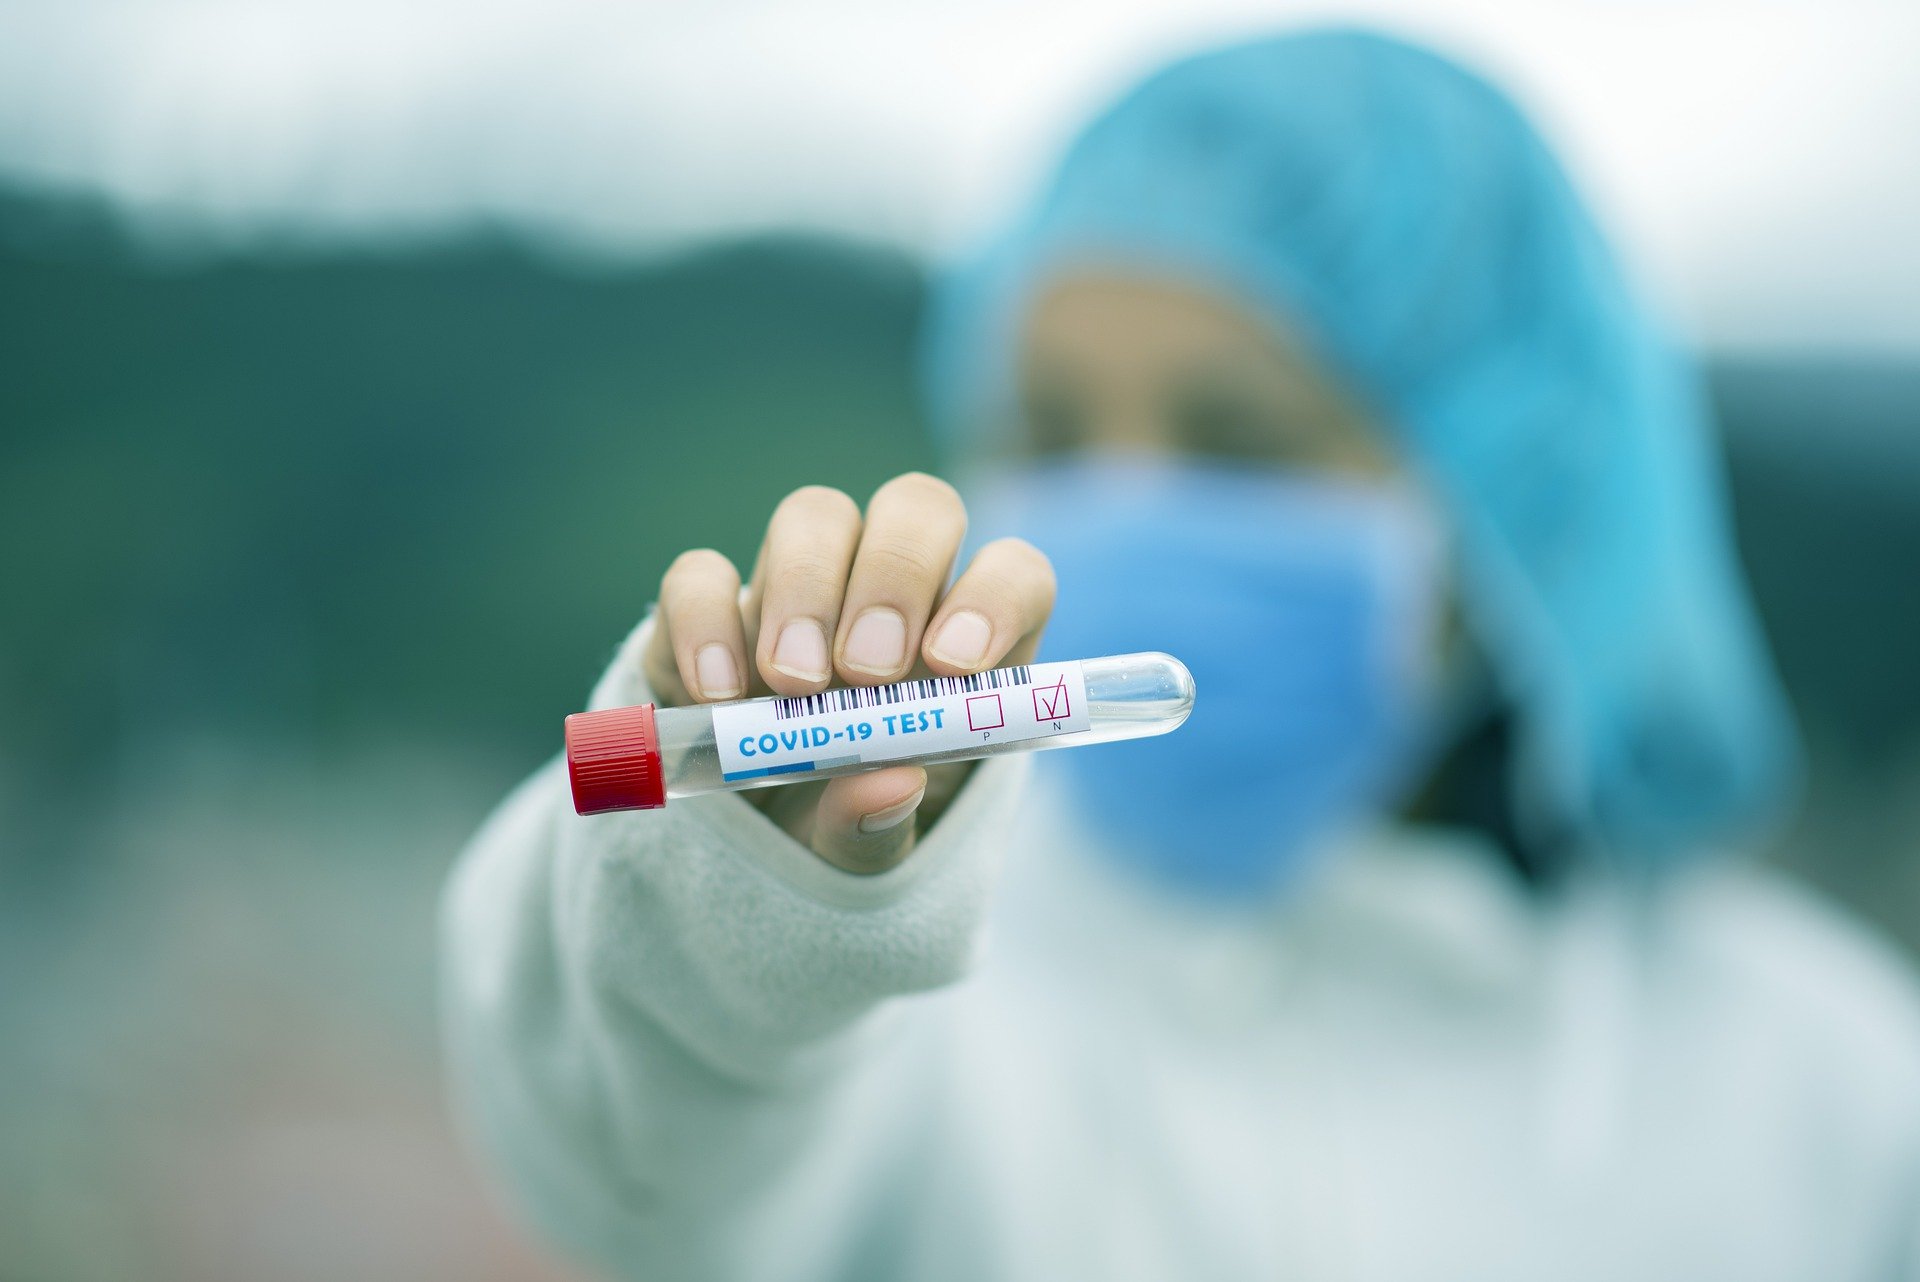 Coronavirus: in Toscana 505 nuovi casi, età media 48 anni. 24 decessi